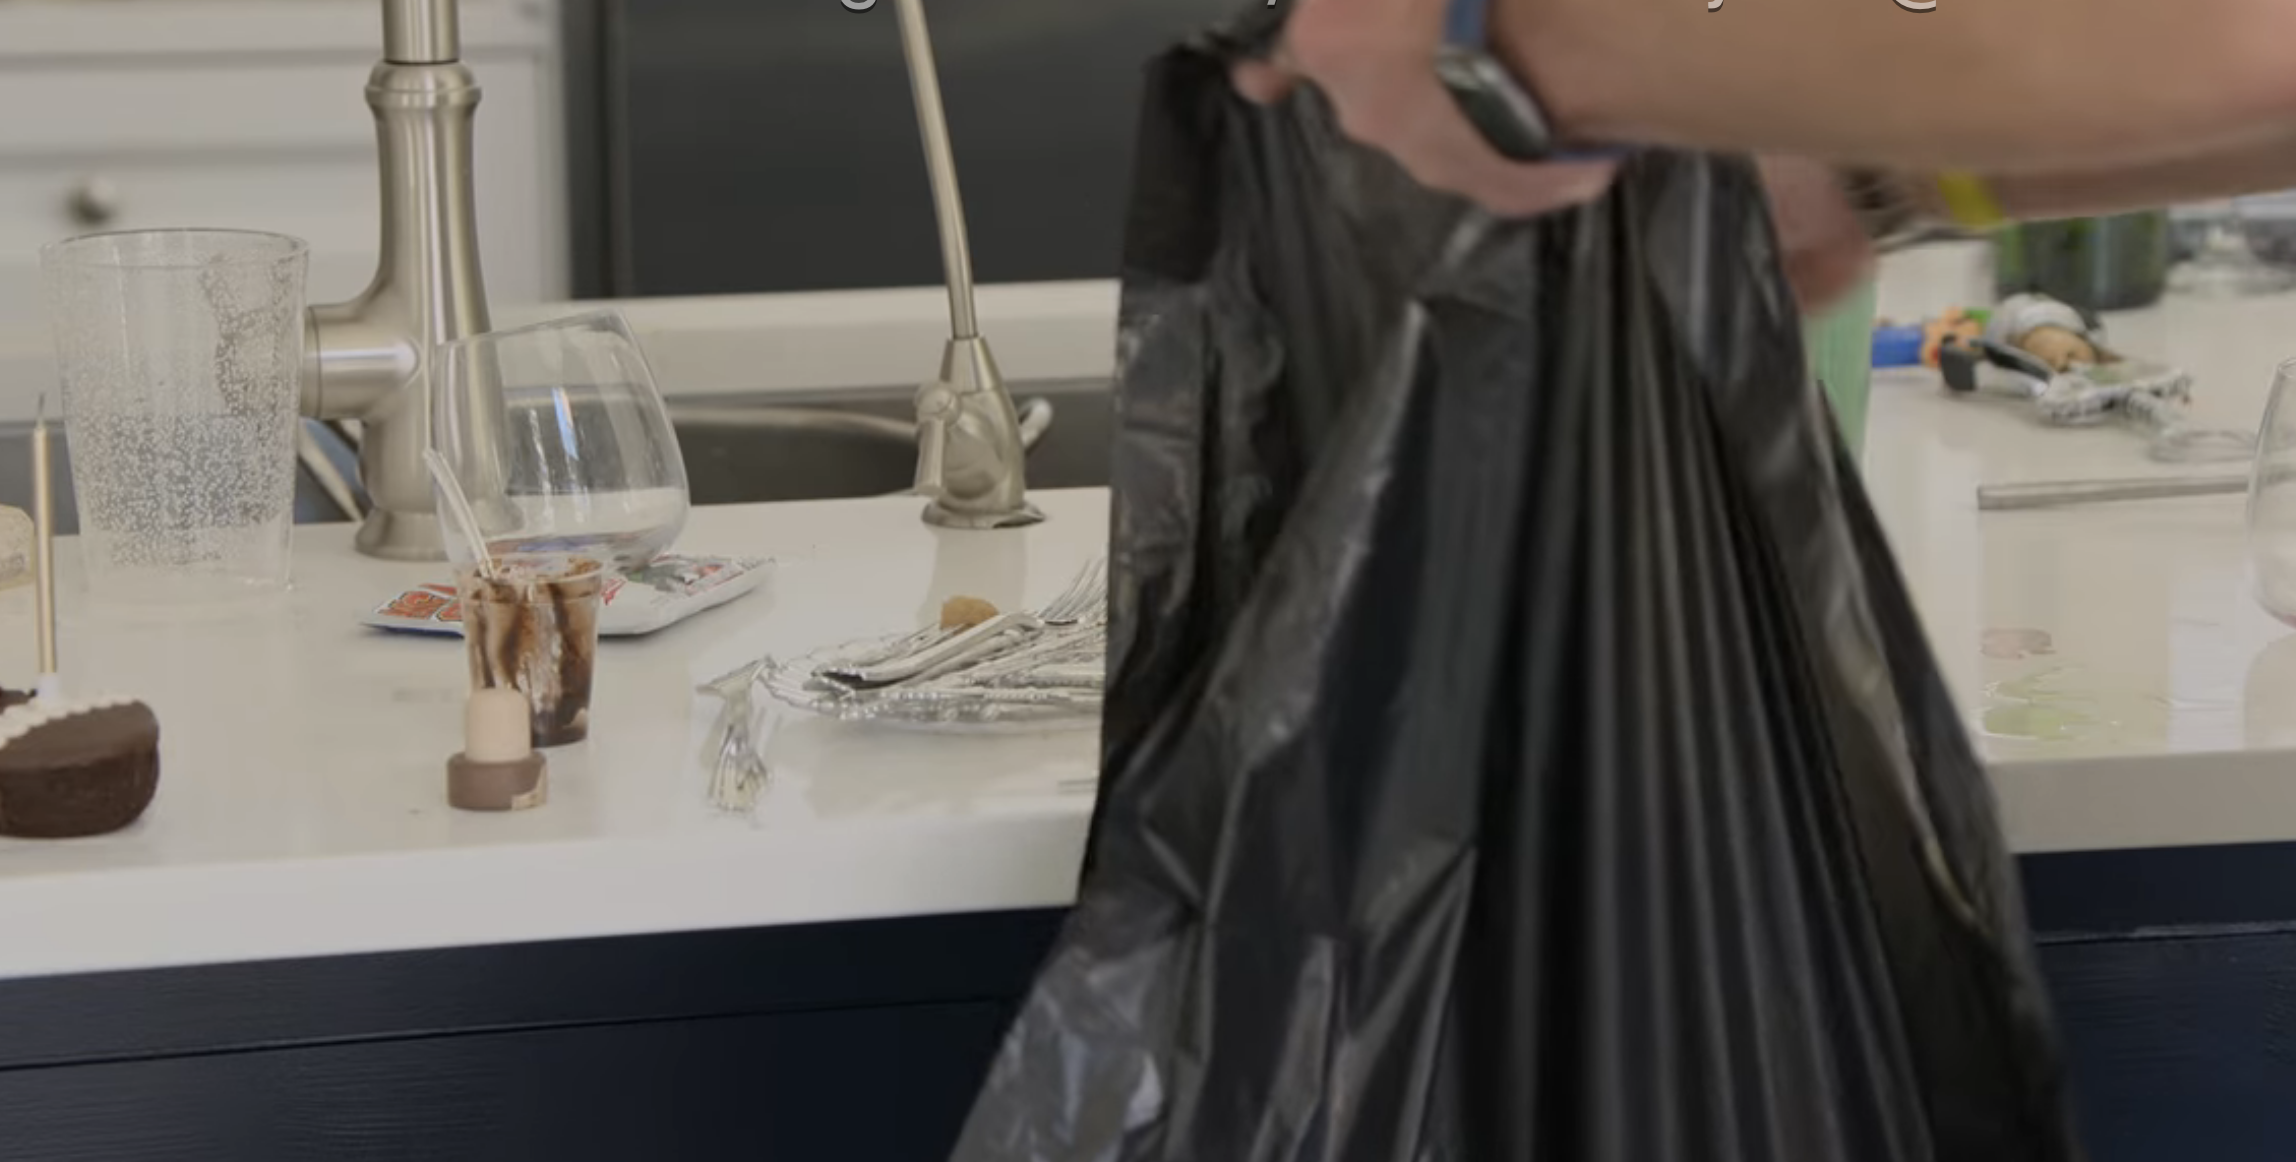 Someone with a trashbag